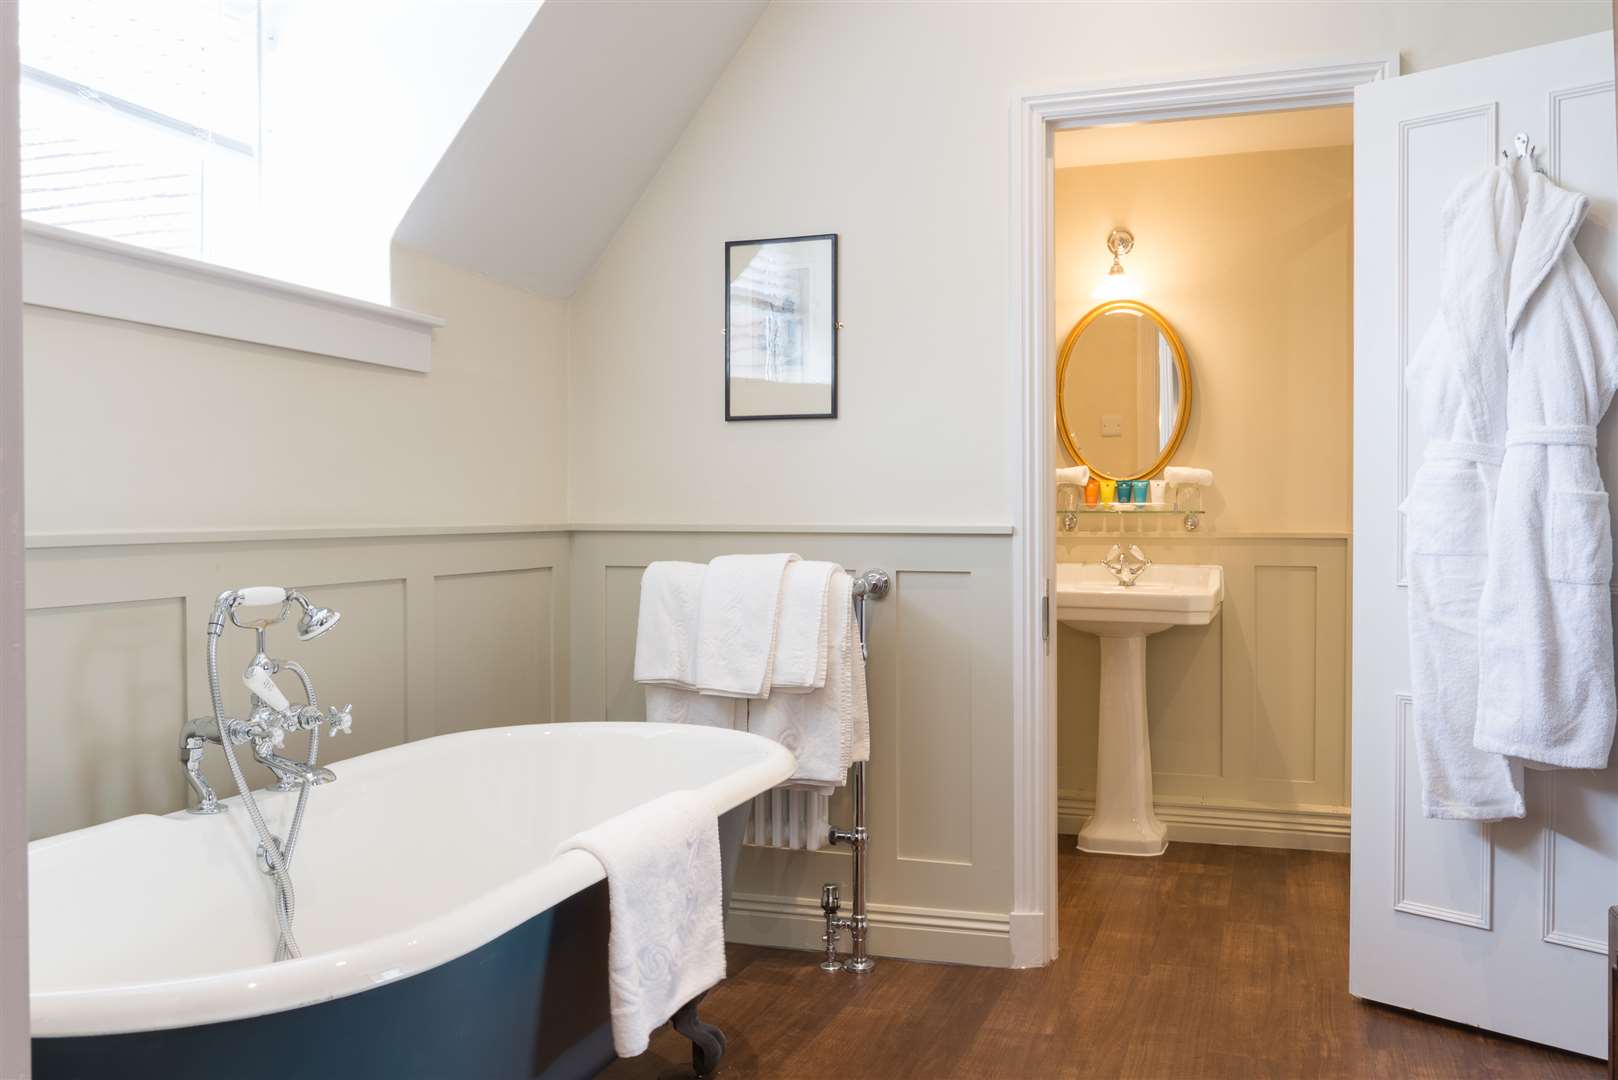 An en-suite bathroom at Burley Manor. Picture: Polymedia